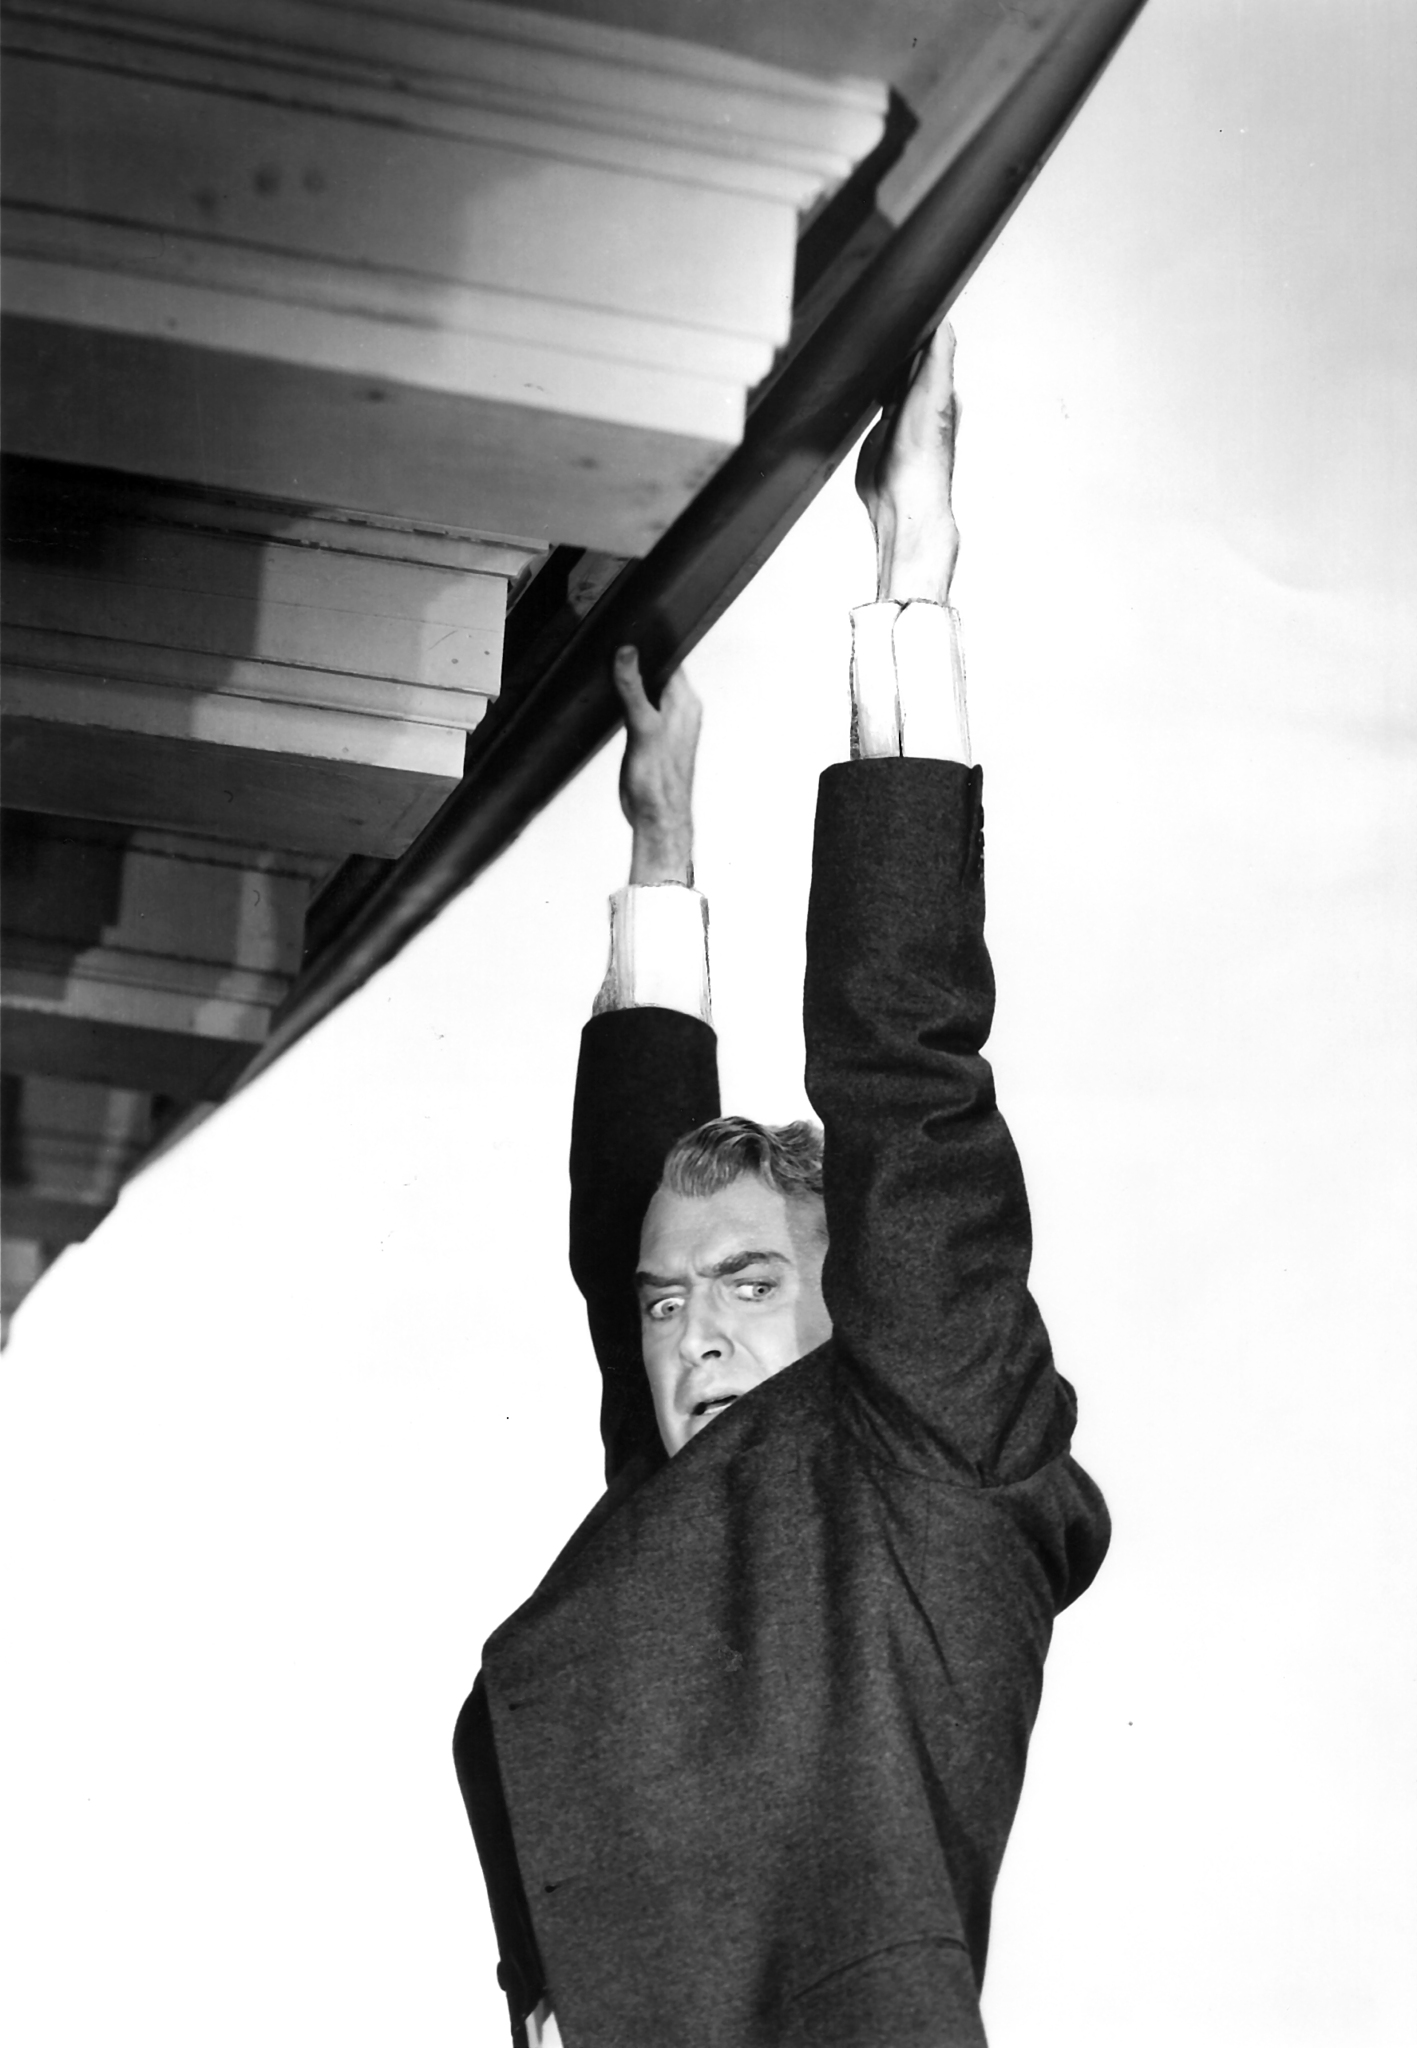 James Stewart in Vertigo (1958)